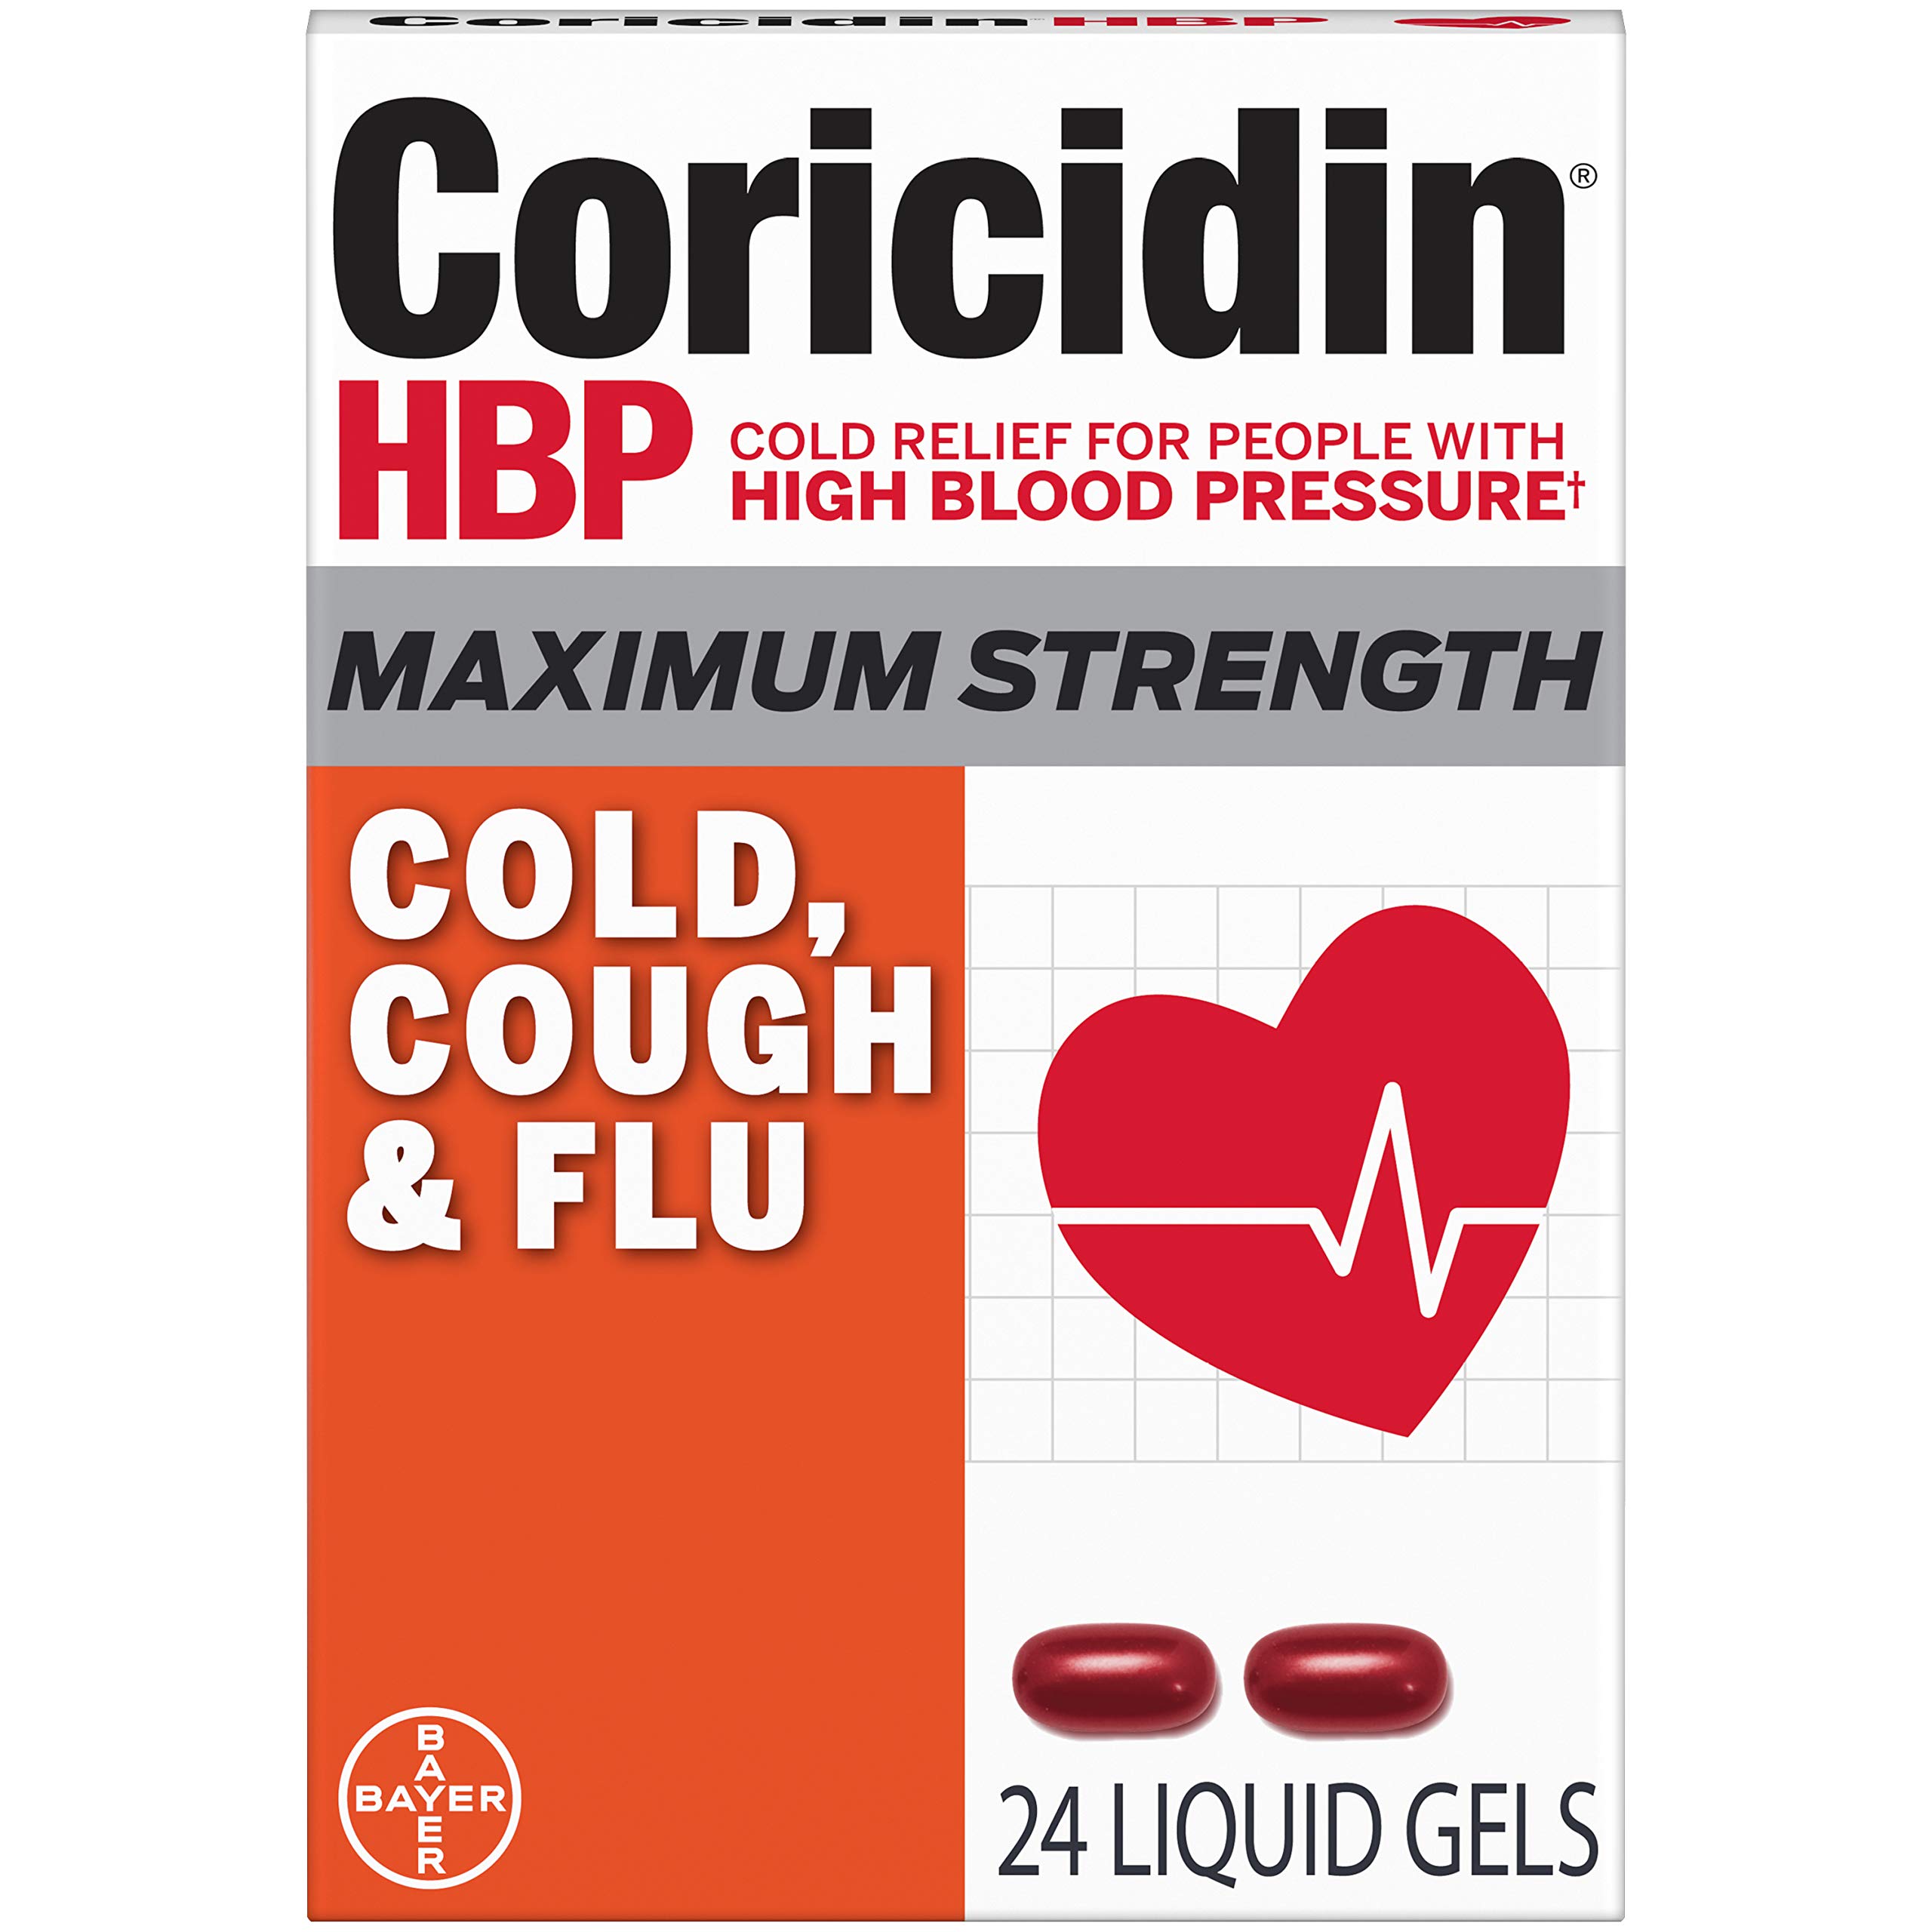 Coricidin Hbp, Decongestant-free Maximum Strength Cold, Cough & Flu Liquid Gels, 24 Count